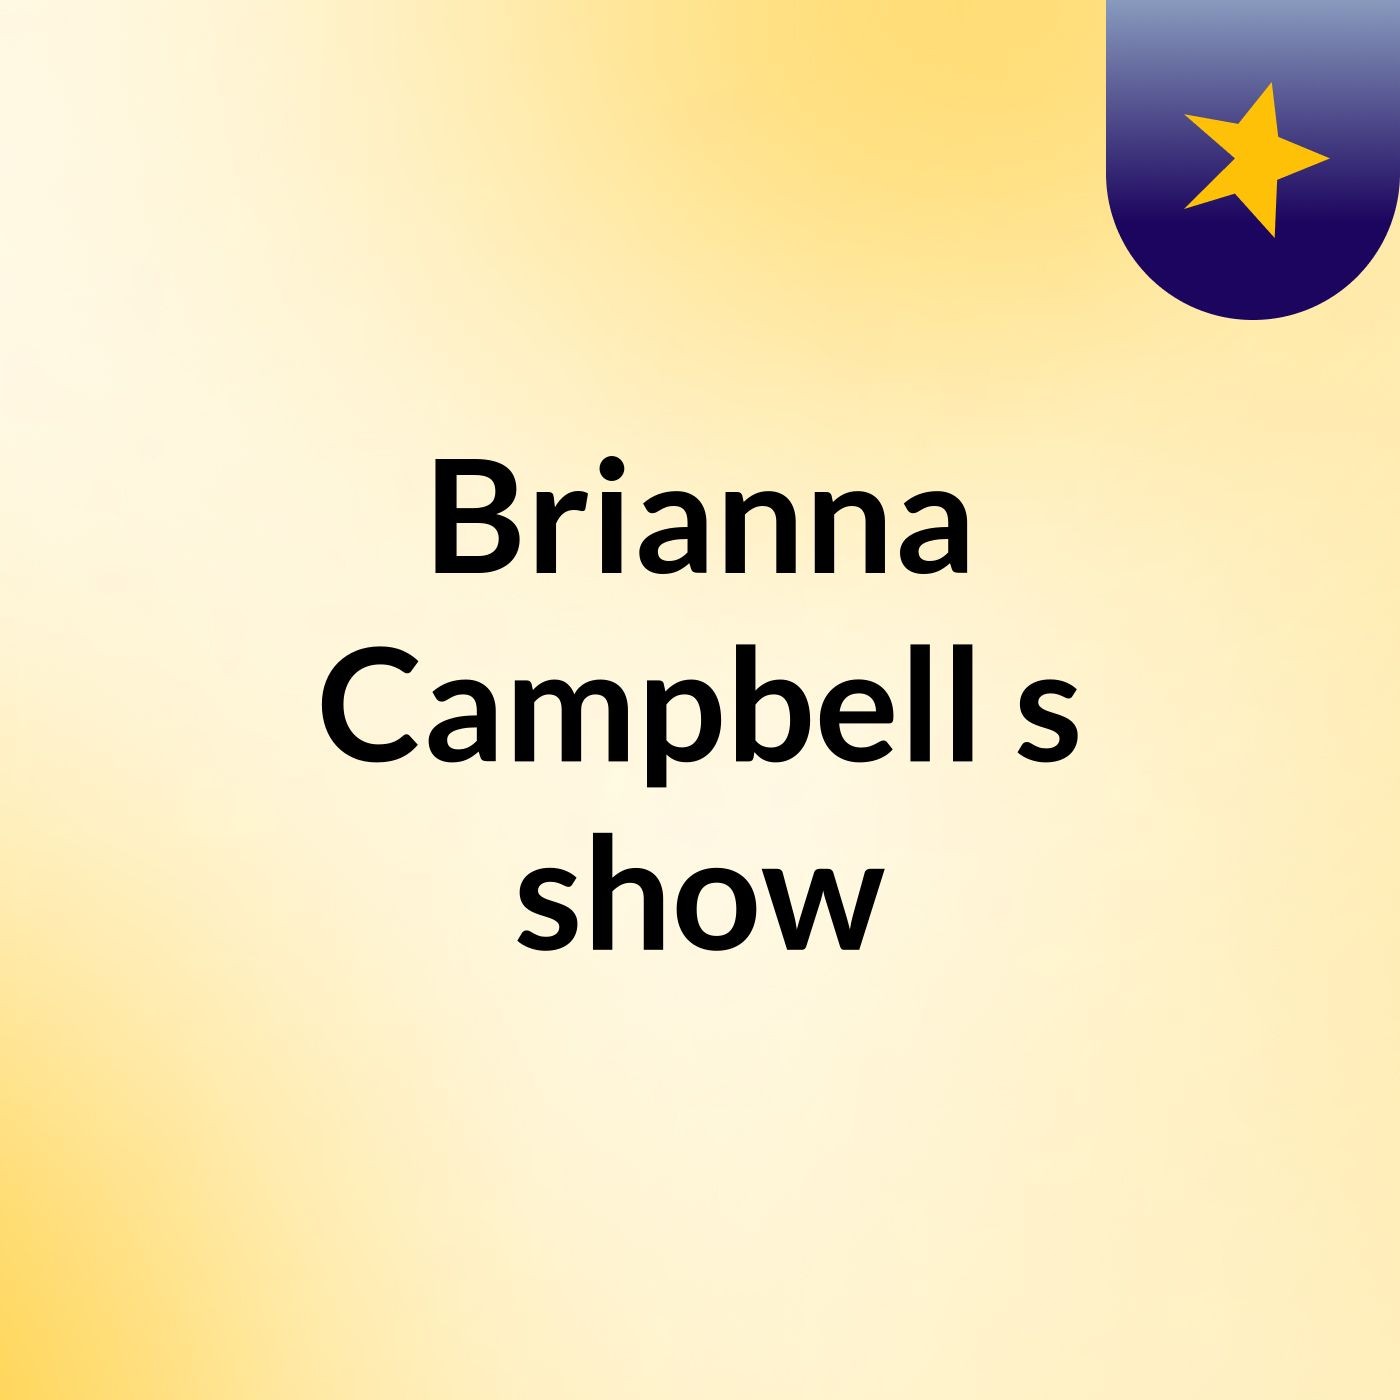 Brianna Campbell's show